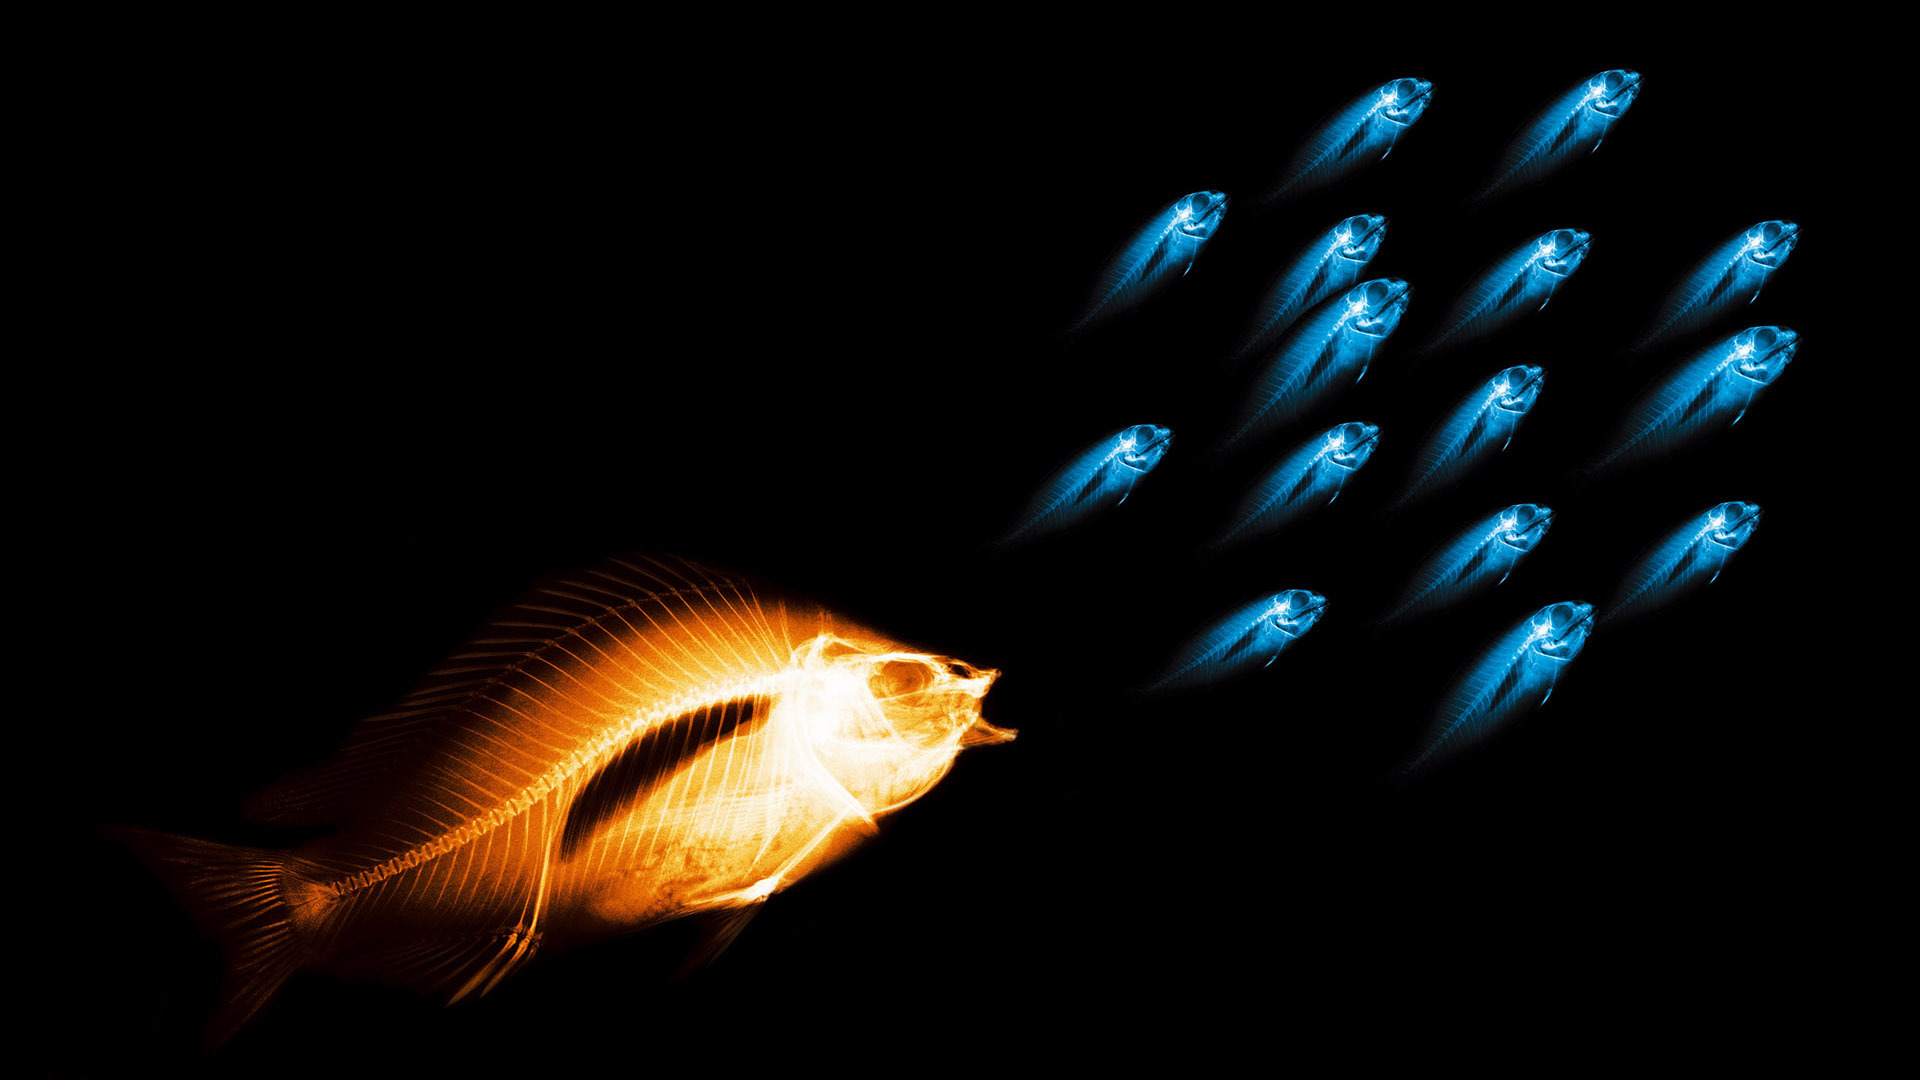 рыбы рентген, текстура, фон, скачать фото, fish x-ray texture background